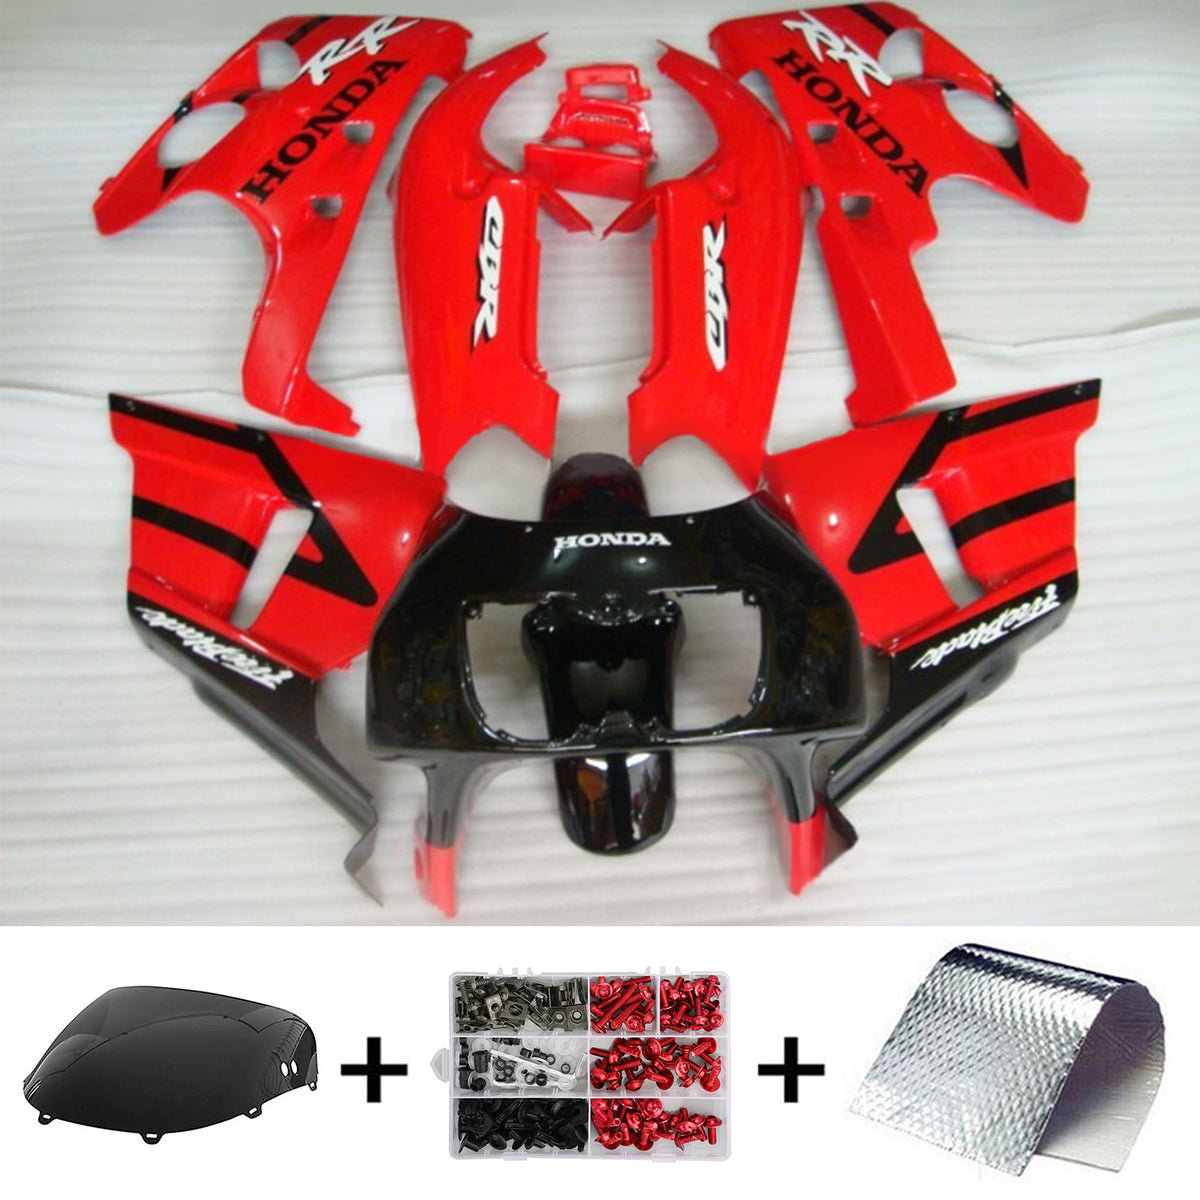 Amotopart 1990-1999 Honda CBR400RR NC29 Kit carena rosso e nero